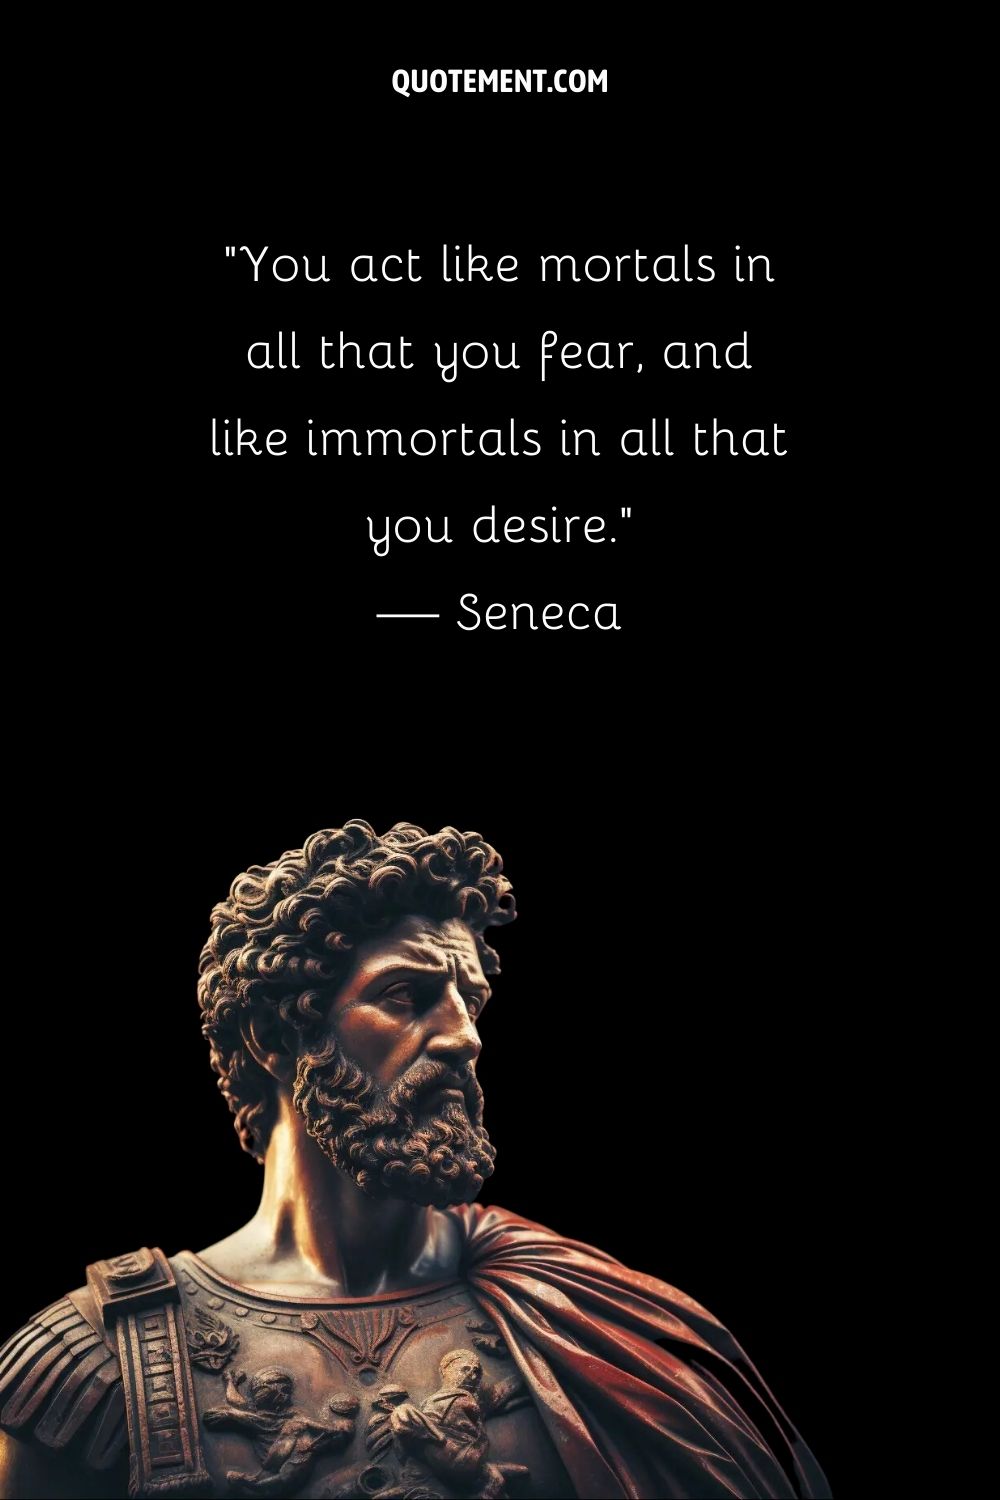 Serene Seneca immortalized in stone